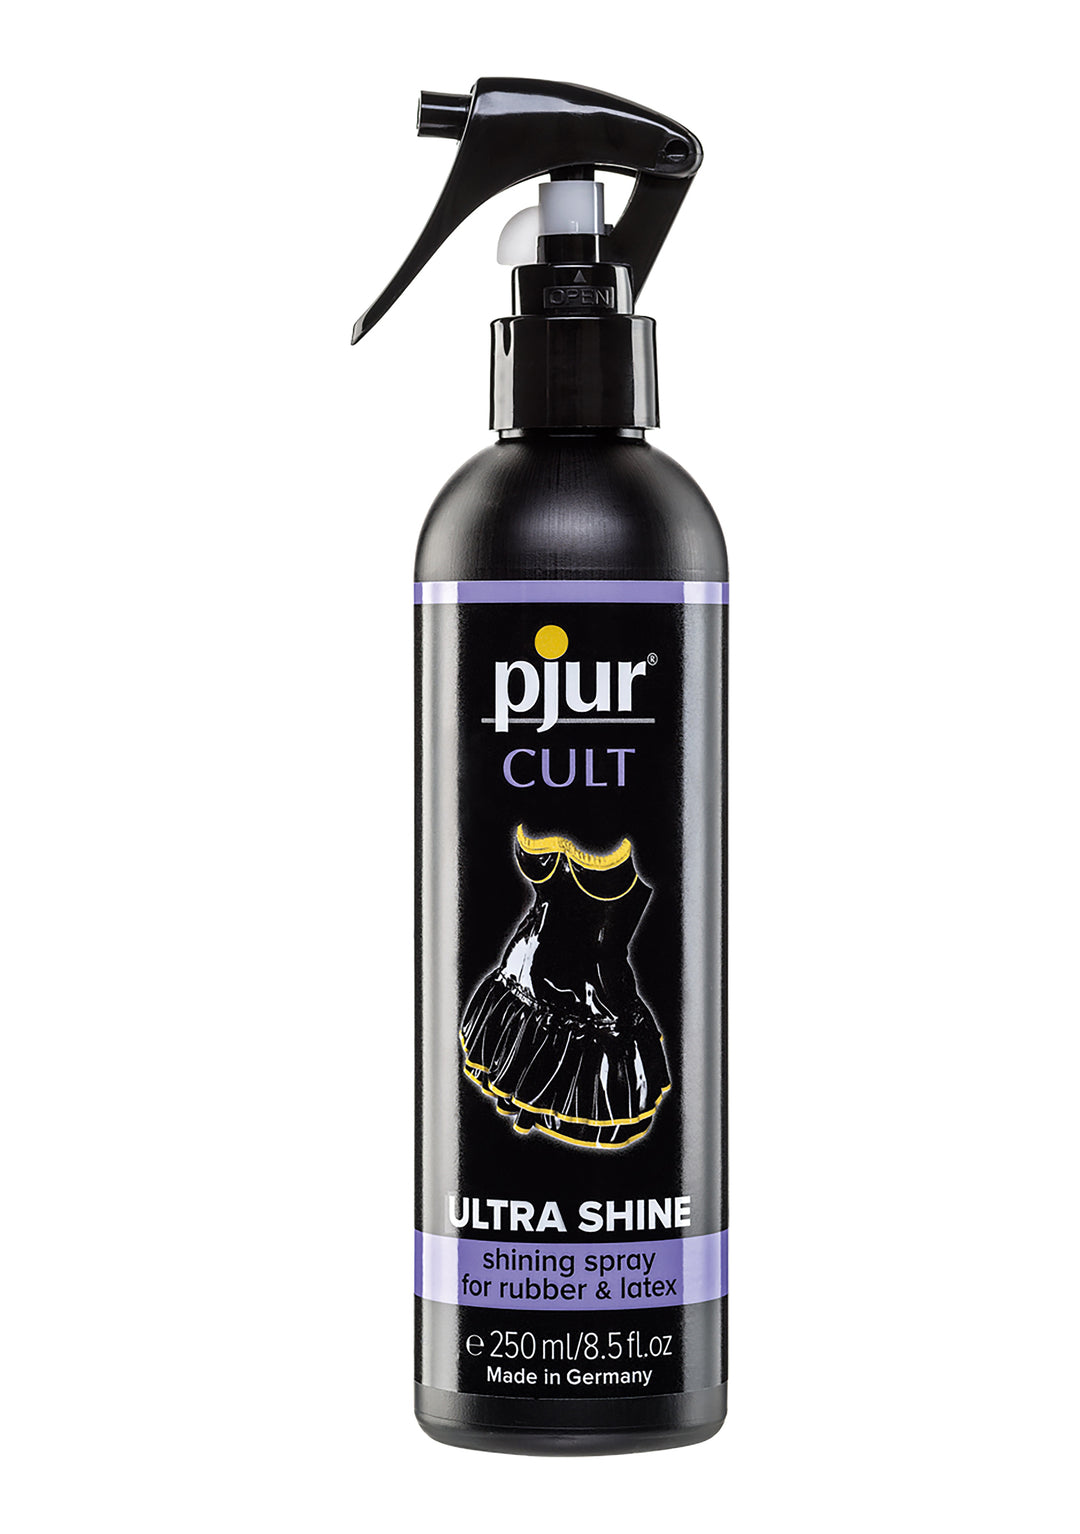 pjur - CULT Ultra Shine